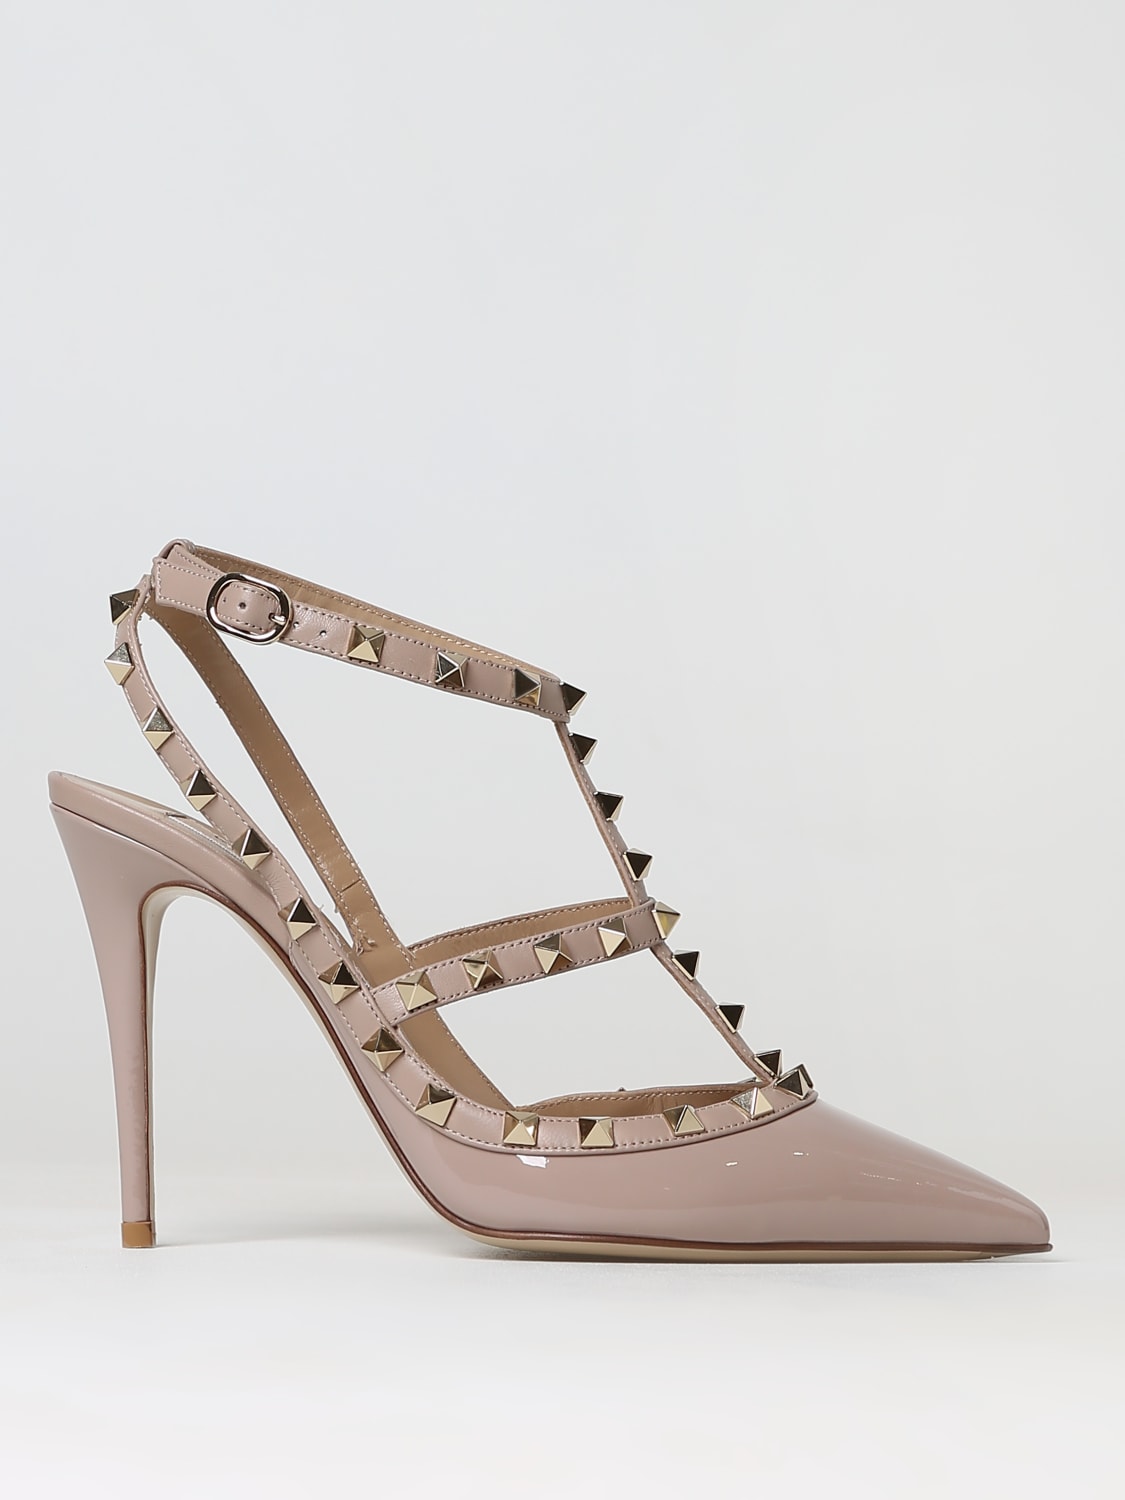 Skorpe mærkelig forfatter VALENTINO GARAVANI: Rockstud pumps in patent leather - Blush Pink |  Valentino Garavani high heel shoes 3W2S0393VNW online at GIGLIO.COM